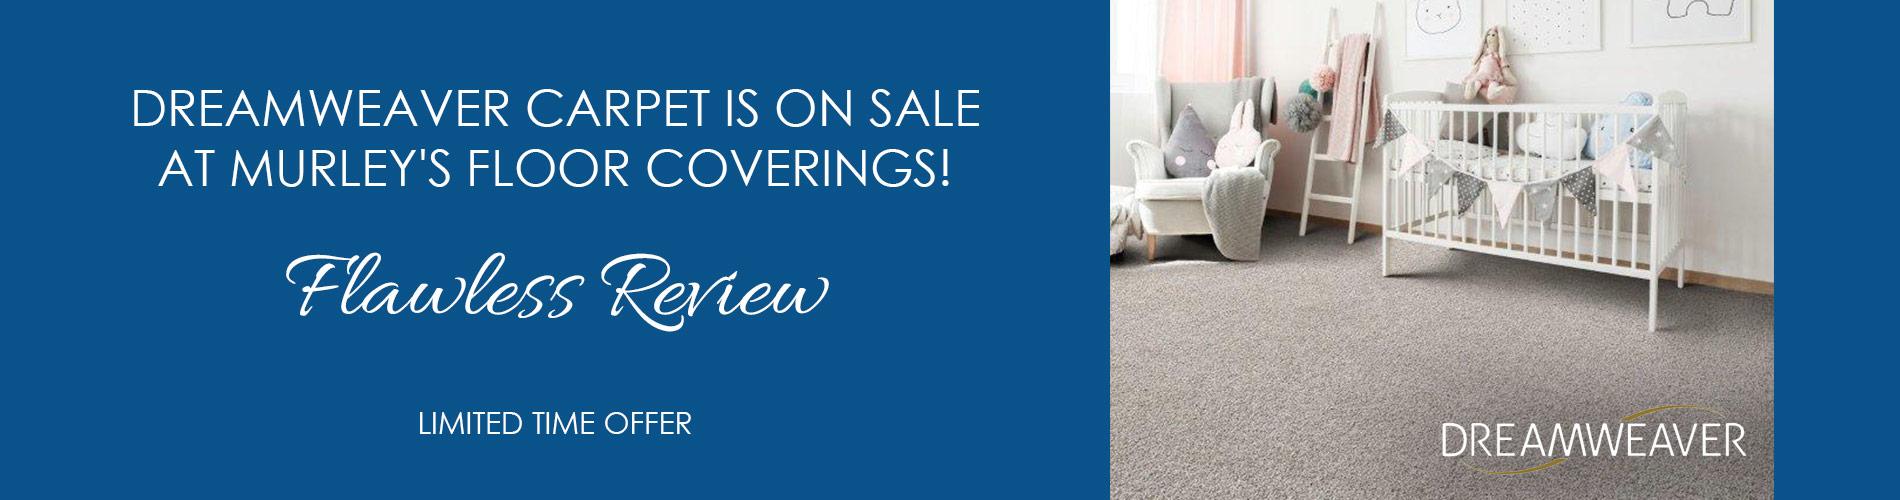 Dreamweaver Carpet Flawless Review on Sale!